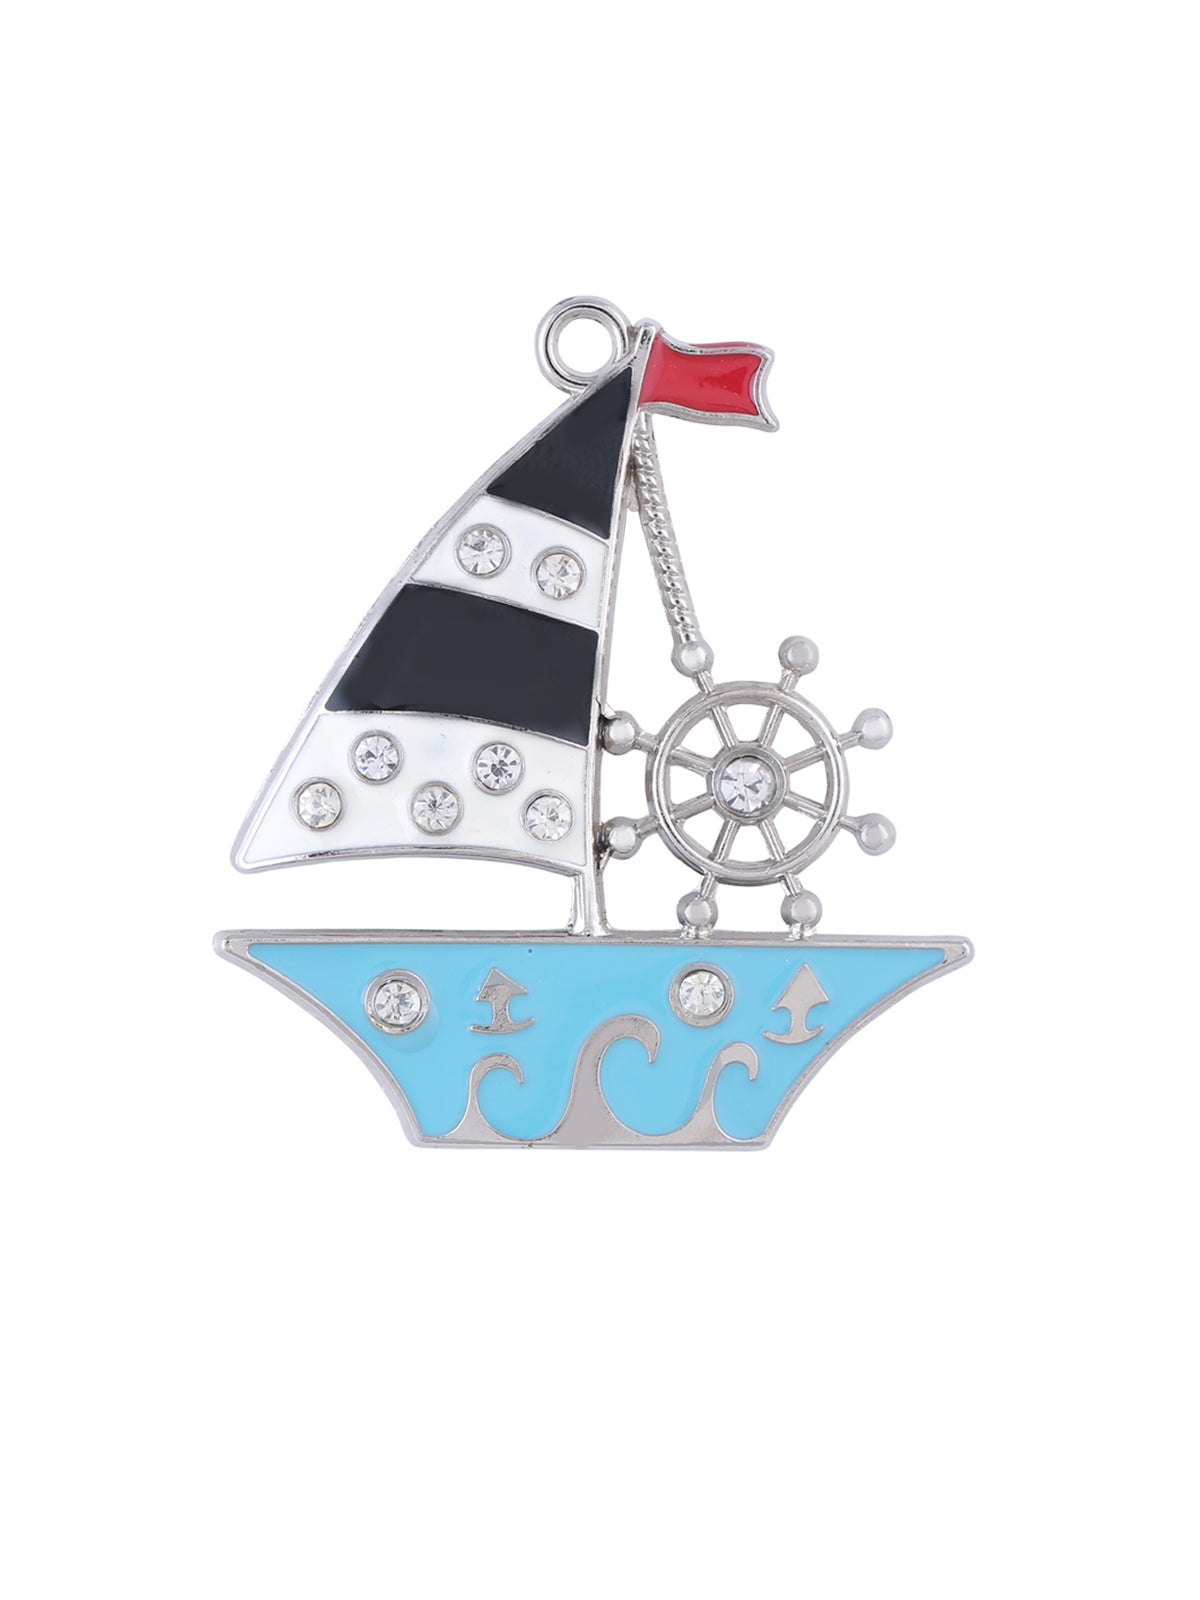 Silver Pirate Sailing Boat/Ship Brooch